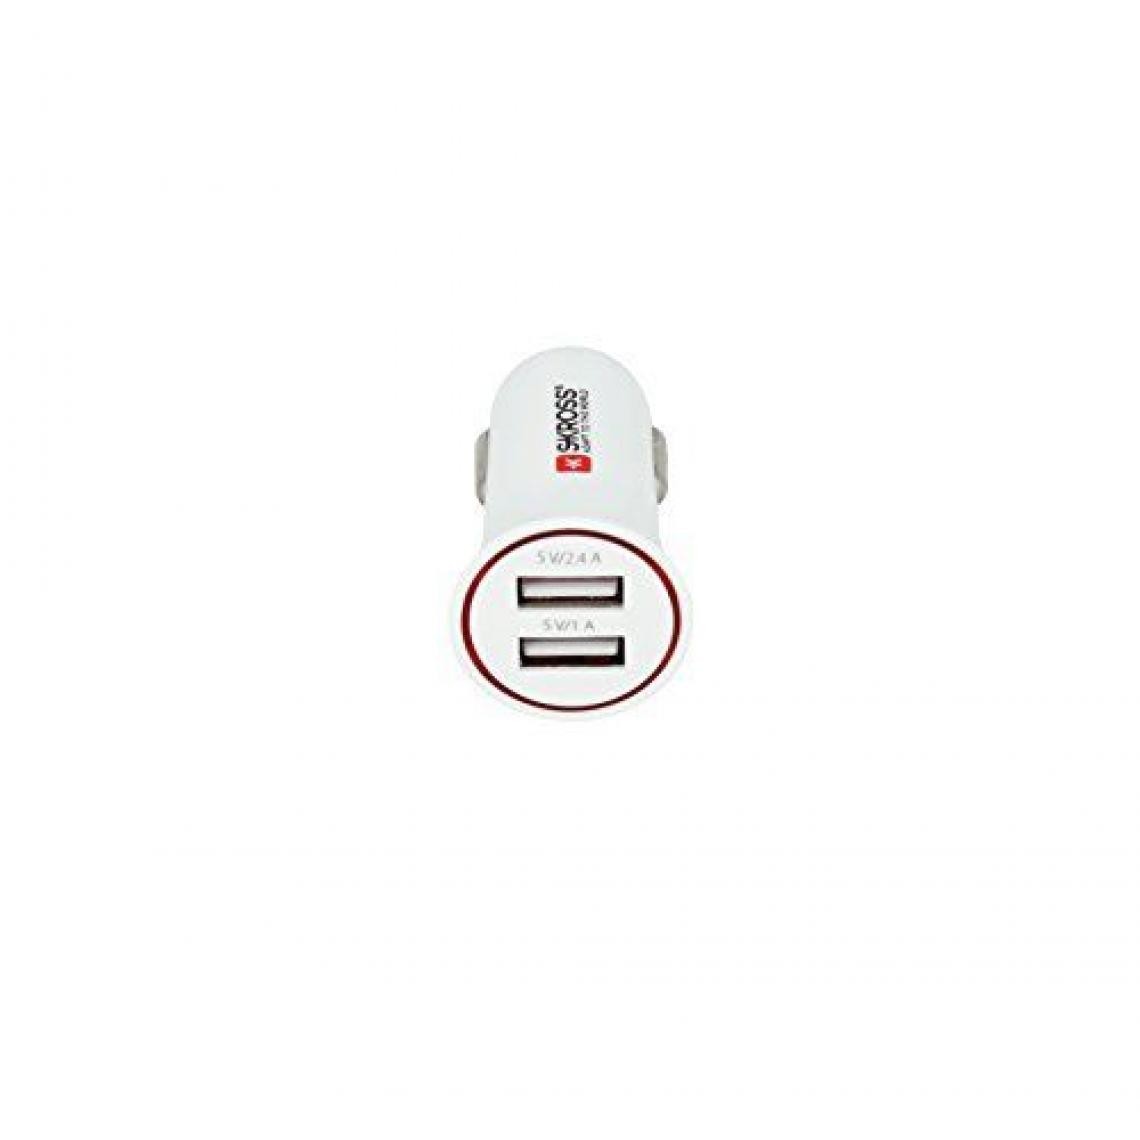 Skross - Skross 2.900610-E Auto Blanc chargeur de téléphones portables - Chargeurs de téléphones portables (Auto, Universel, Allume-cigare, Blanc, 10-24, 5 V) - Chargeur Voiture 12V